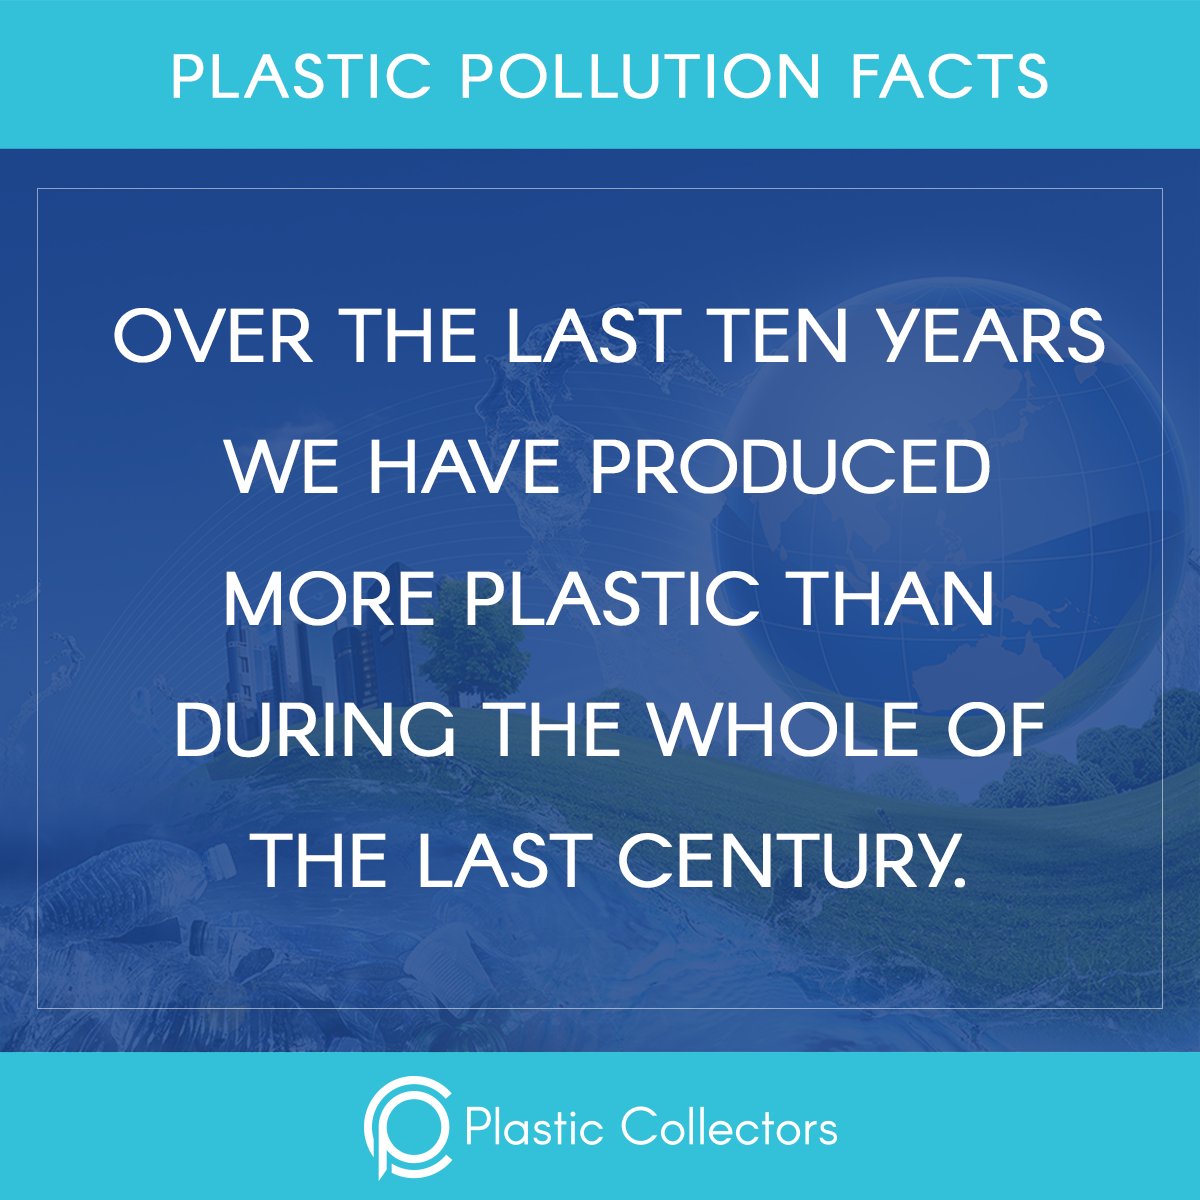 #plasticpollution #pollutionfacts #plasticcollectors #dailyfacts #plasticfreeocean #noplastic #zerowate #zeroplastic #plasticfreeliving #sustainableliving #climate #GlobalWarming